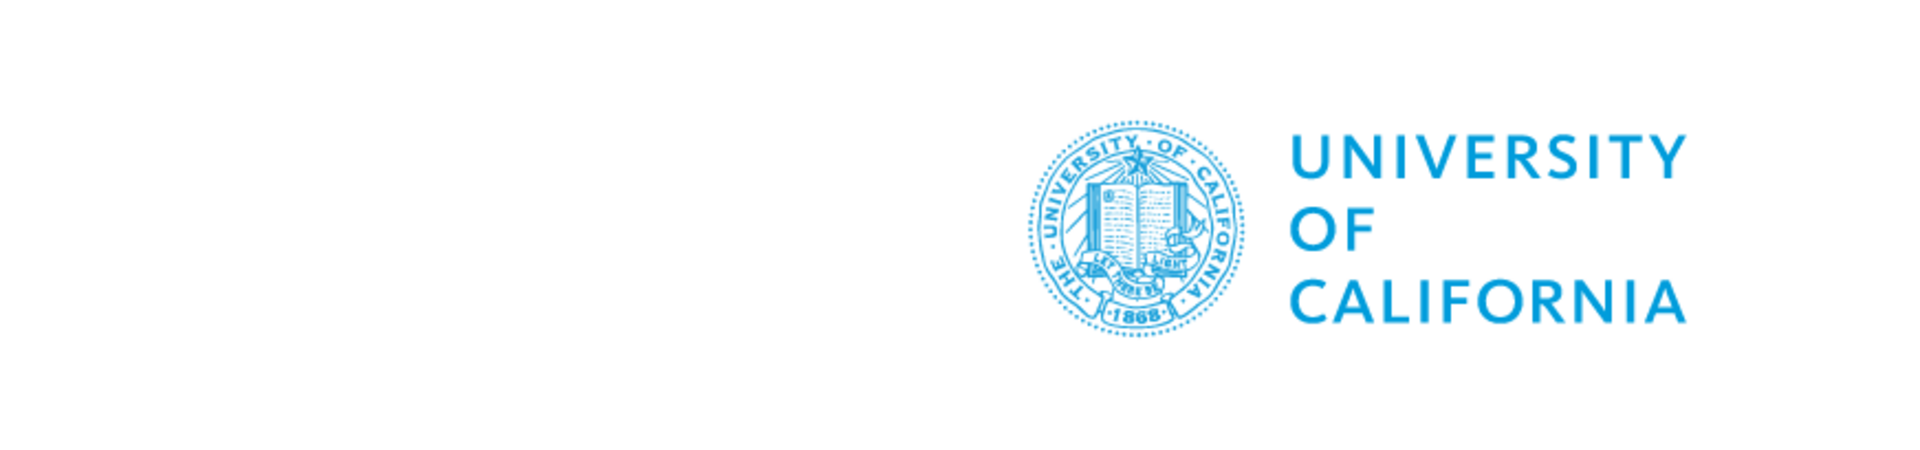 University of California seal